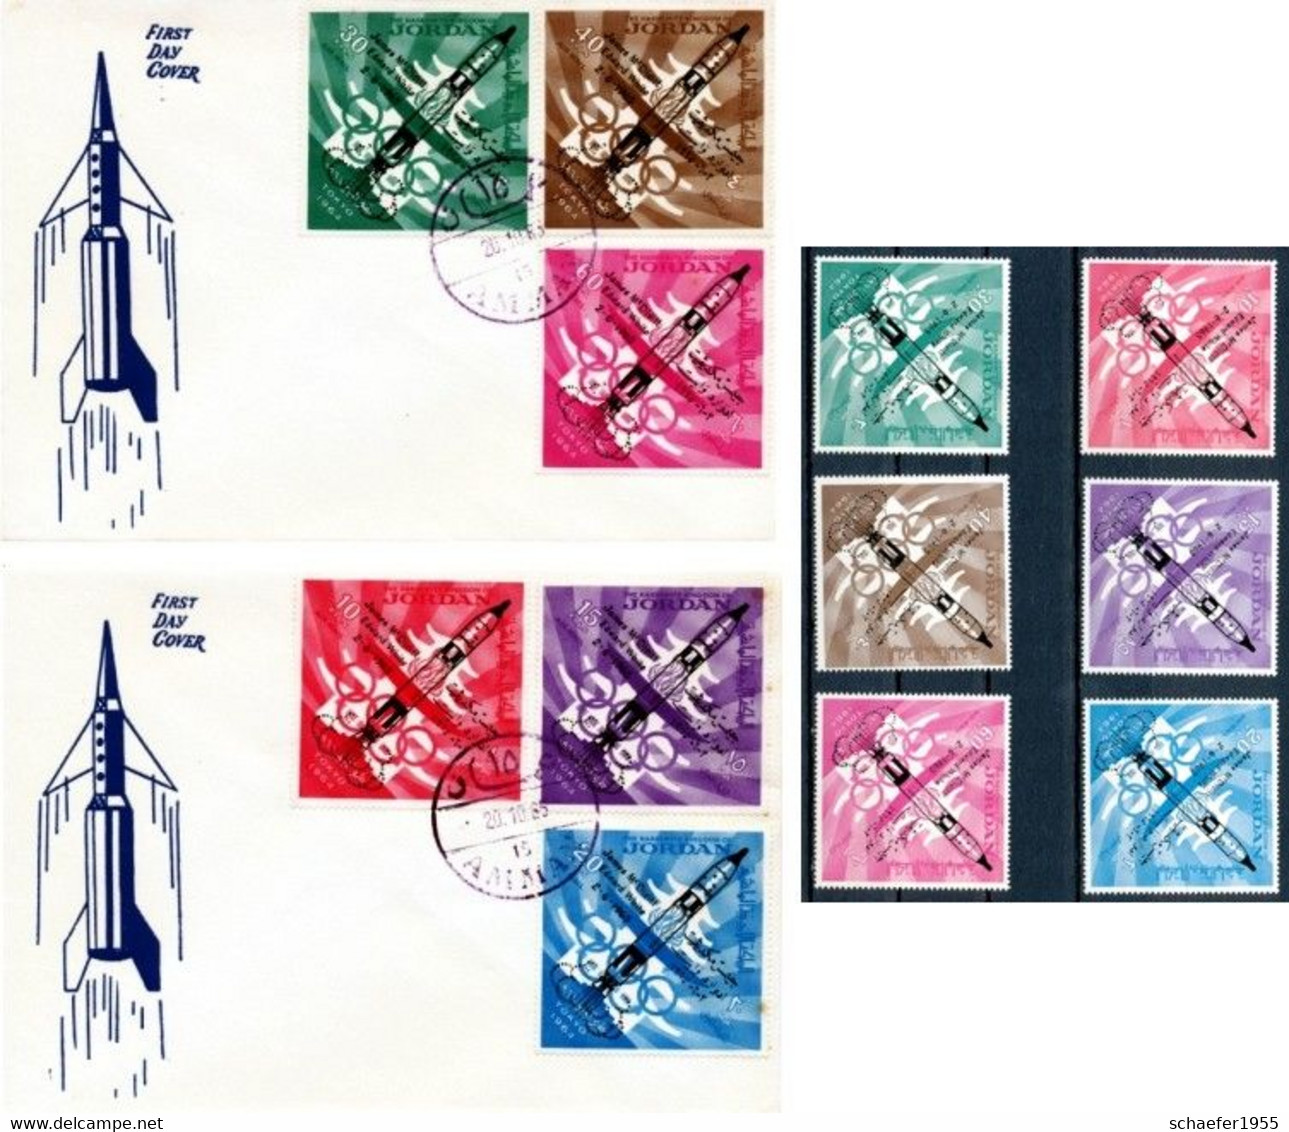 Jordanien, Jordan 1965 Spaceflight 2x FDC + Stamps, Perf, Overp.  Mac Devitt And Edward White - Asien